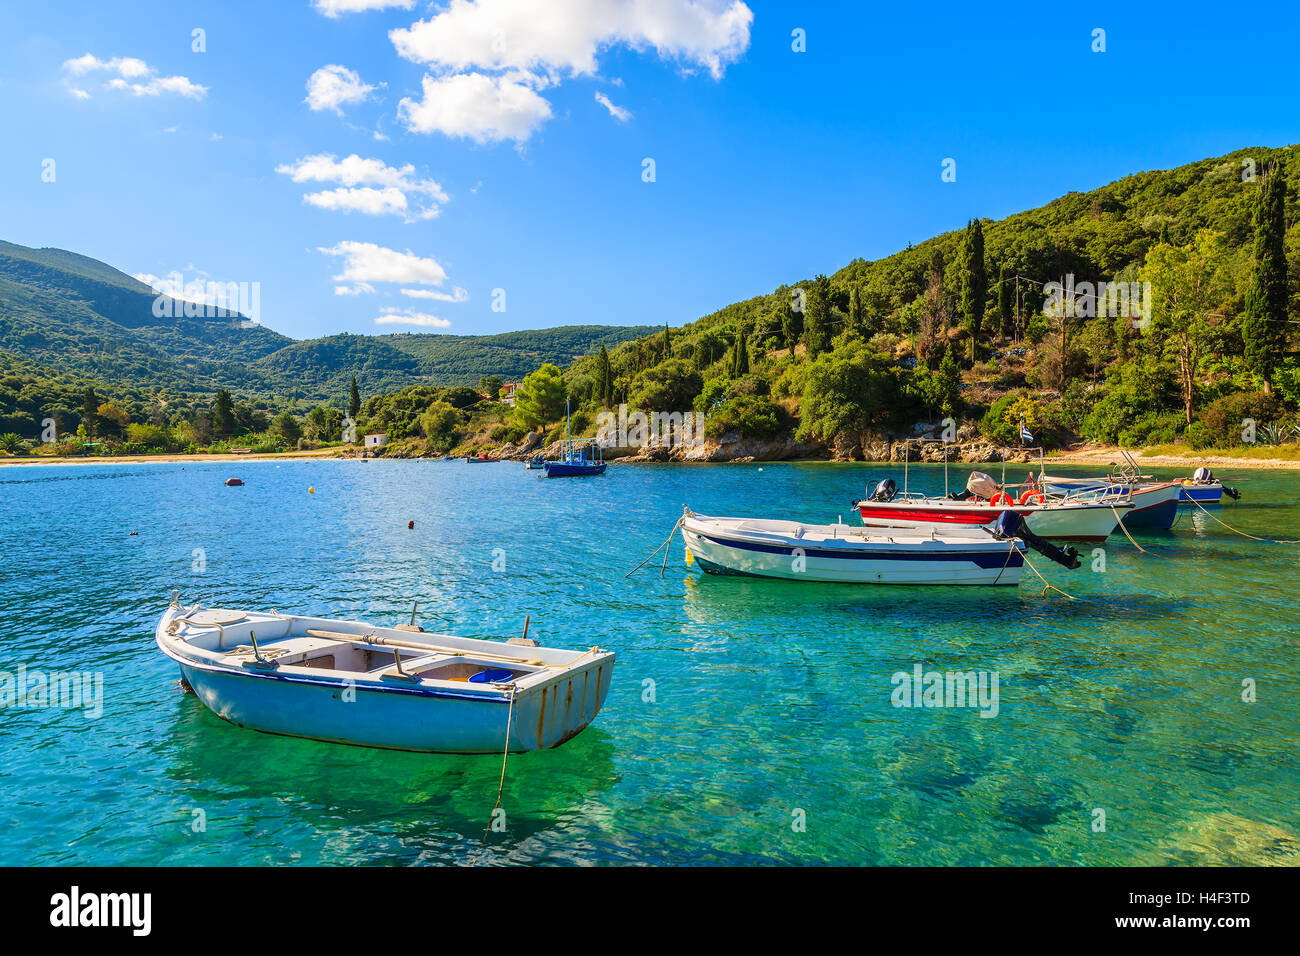 Greek fishing boats on turquoise sea water in beautiful bay, Kefalonia island, Greece Stock Photo